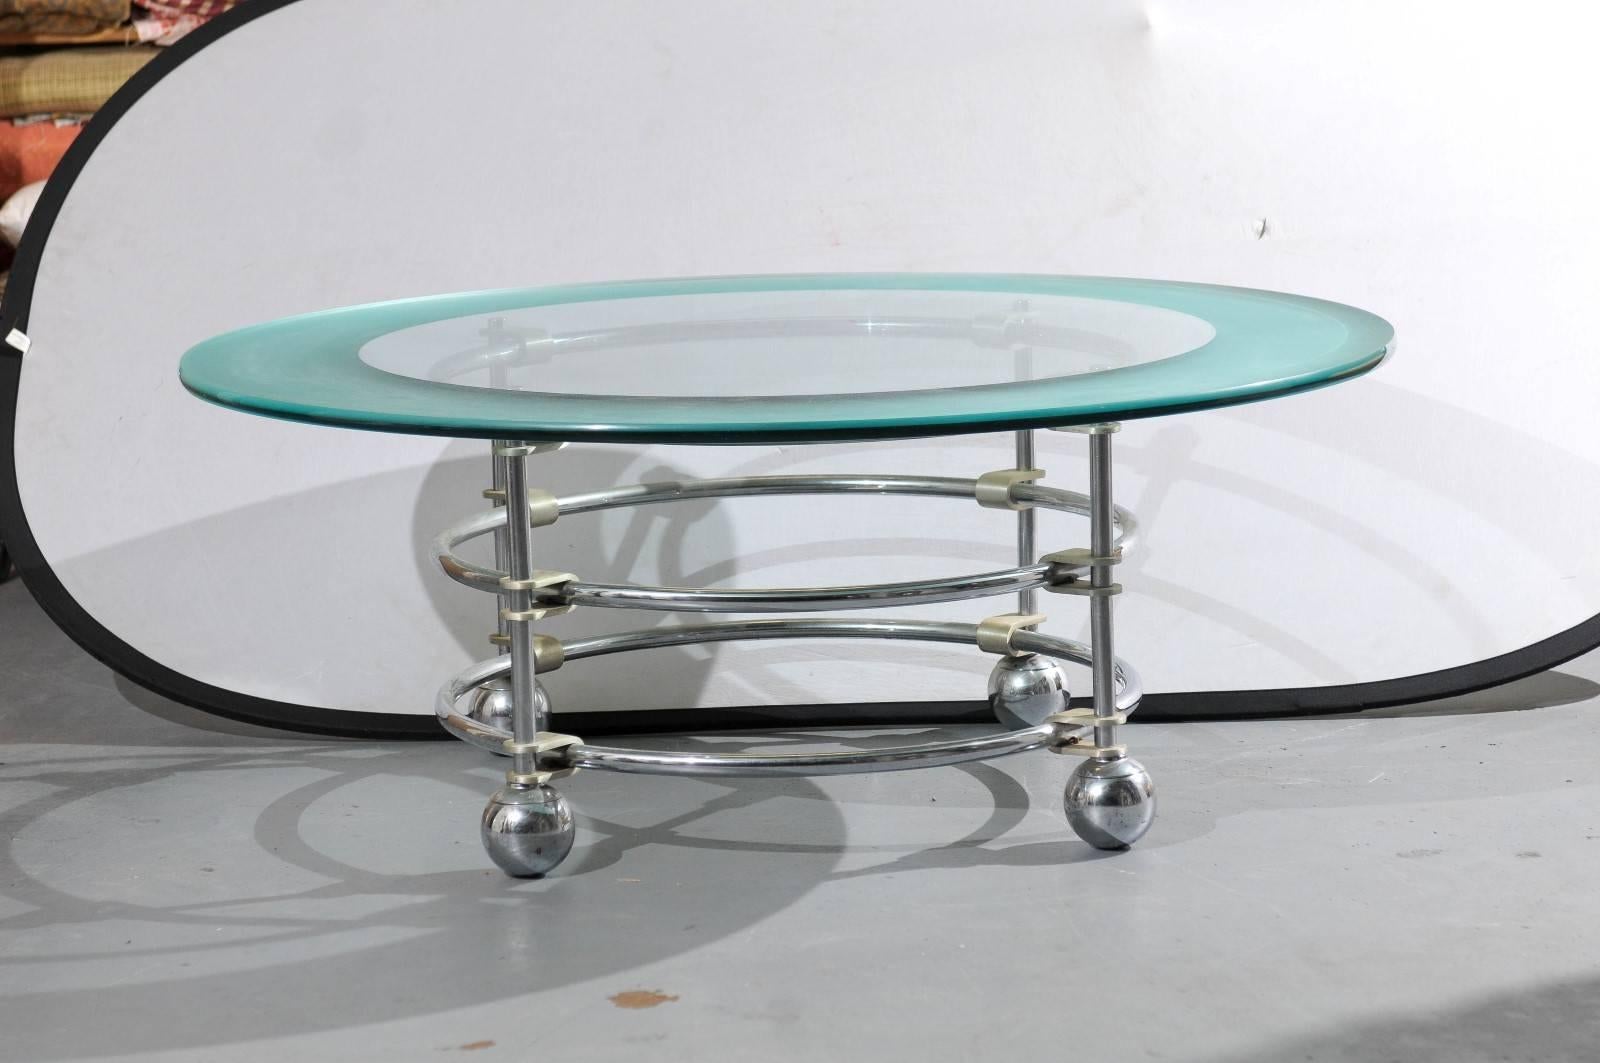 20th Century circular coffee table having a 1/2